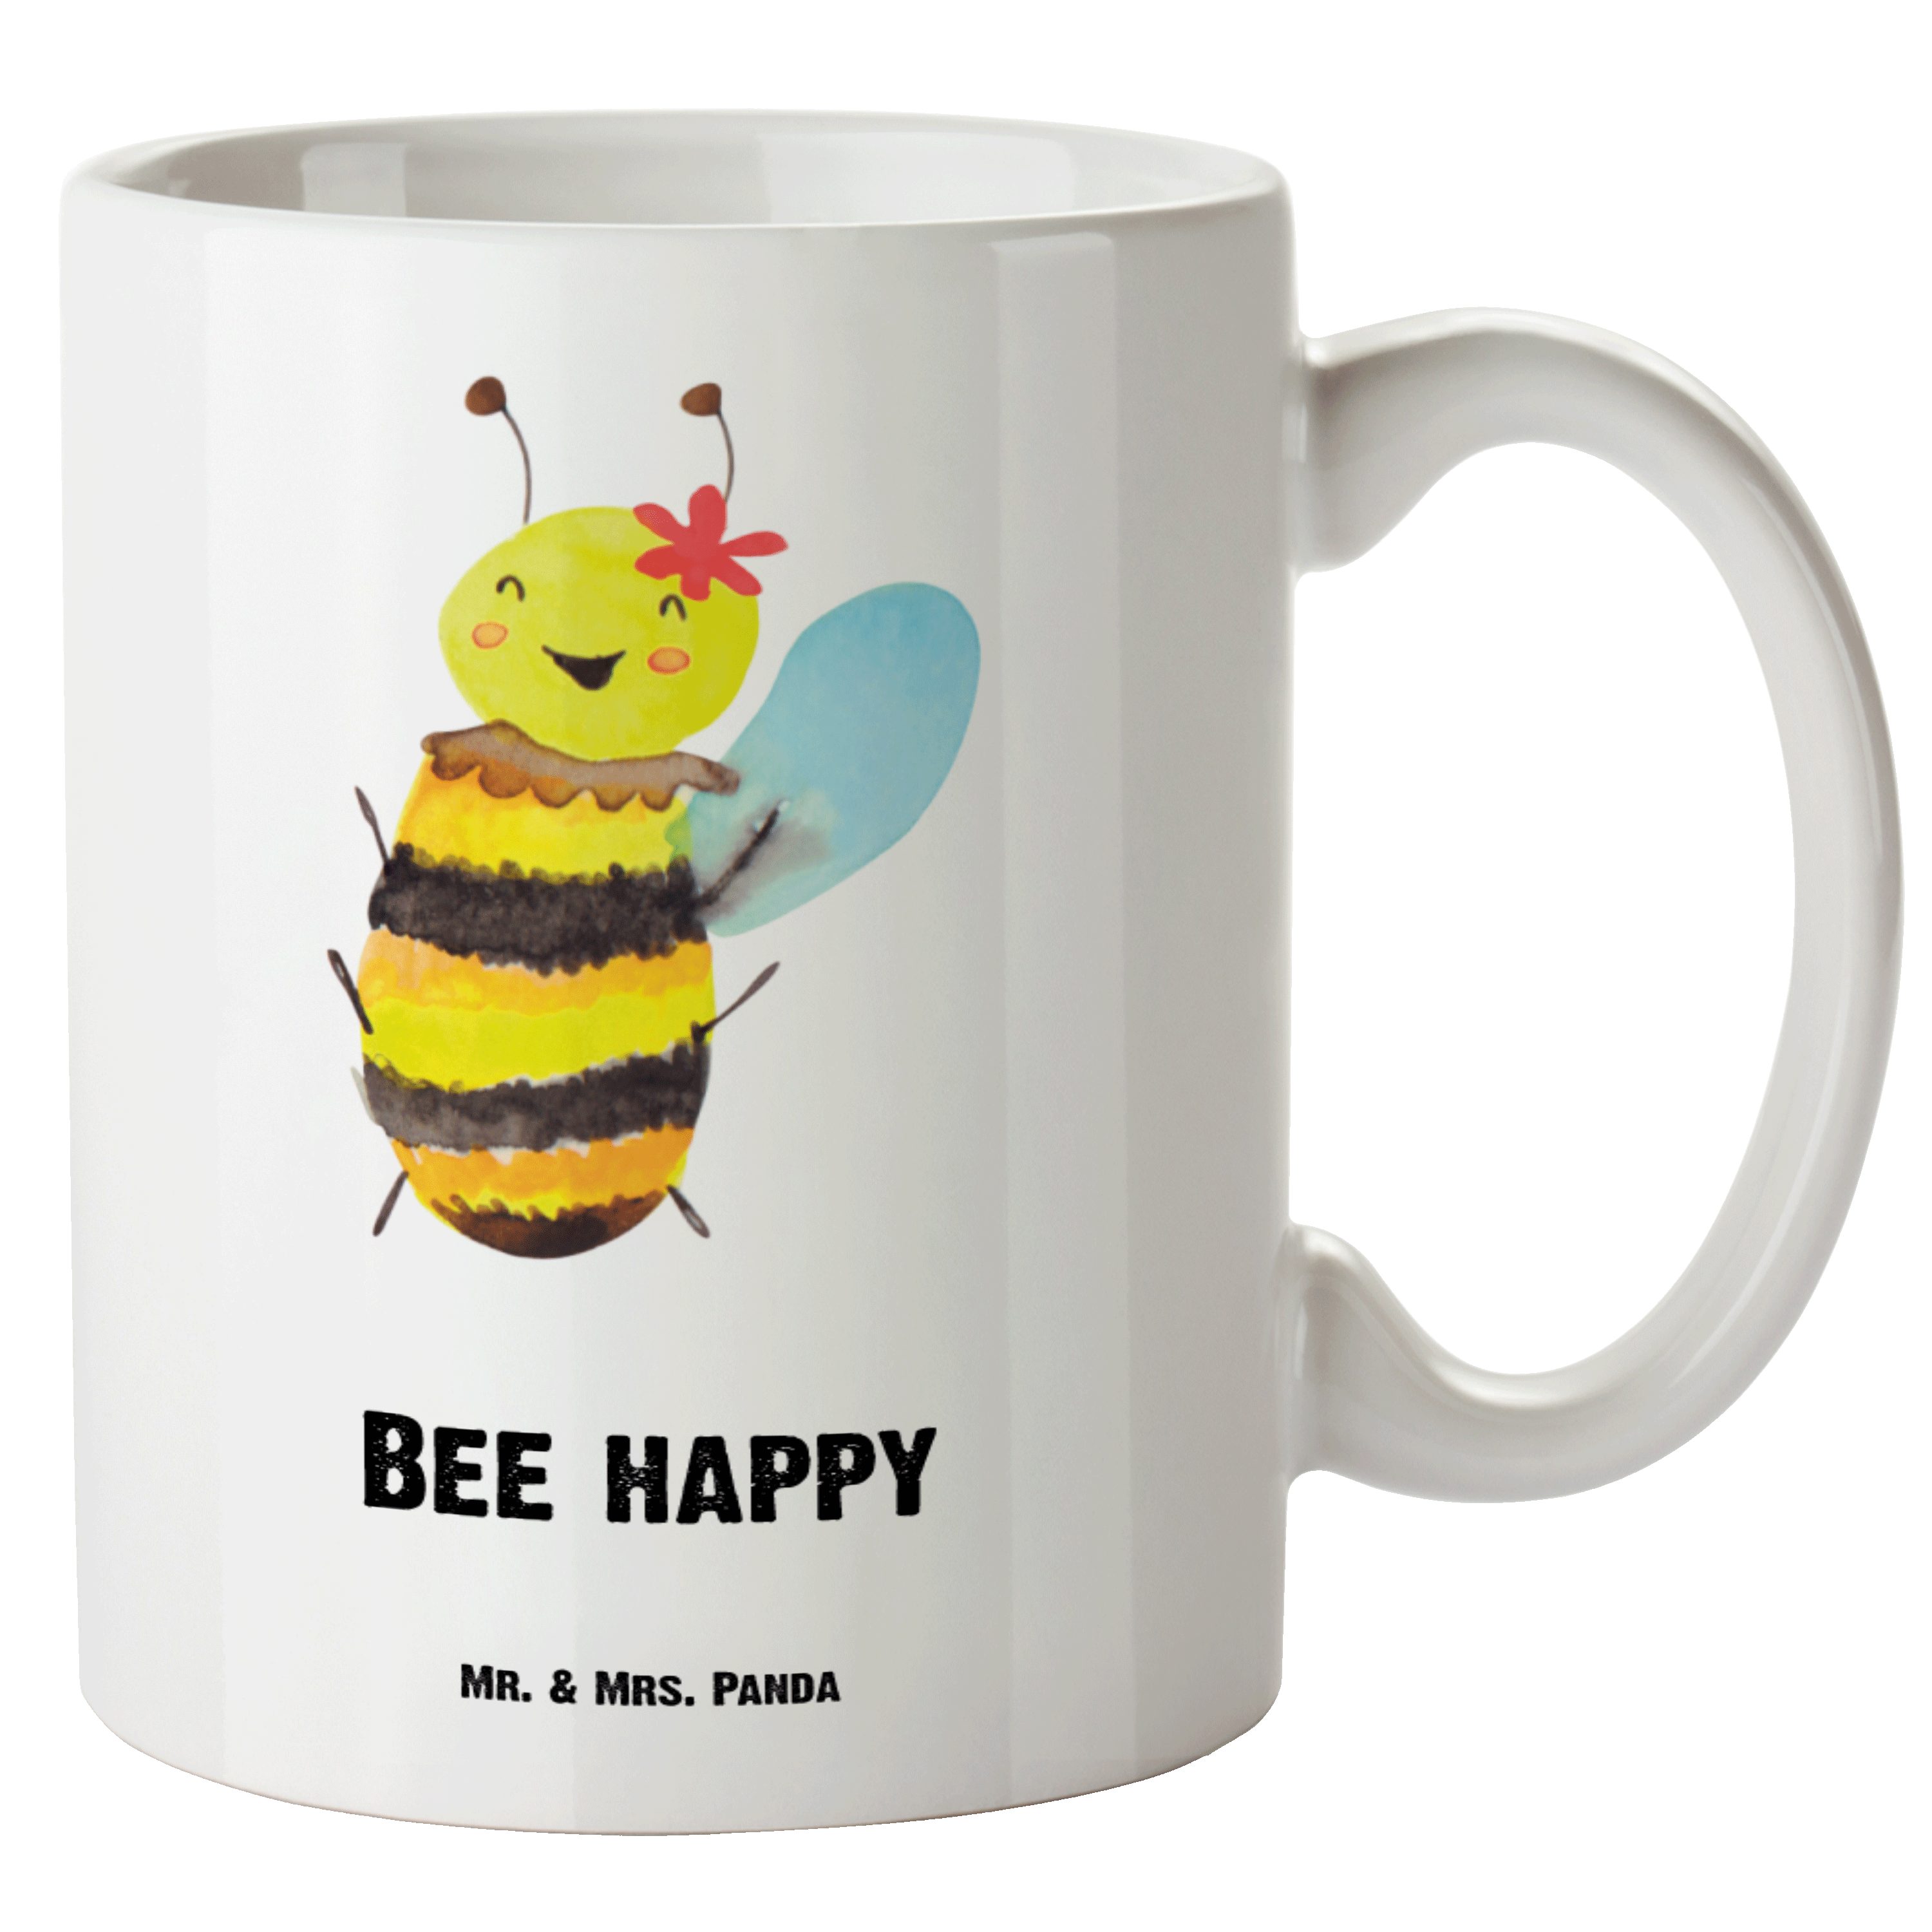 Mr. & Mrs. Panda Tasse Biene Happy - Weiß - Geschenk, Wespe, spülmaschinenfest, Grosse Kaffe, XL Tasse Keramik